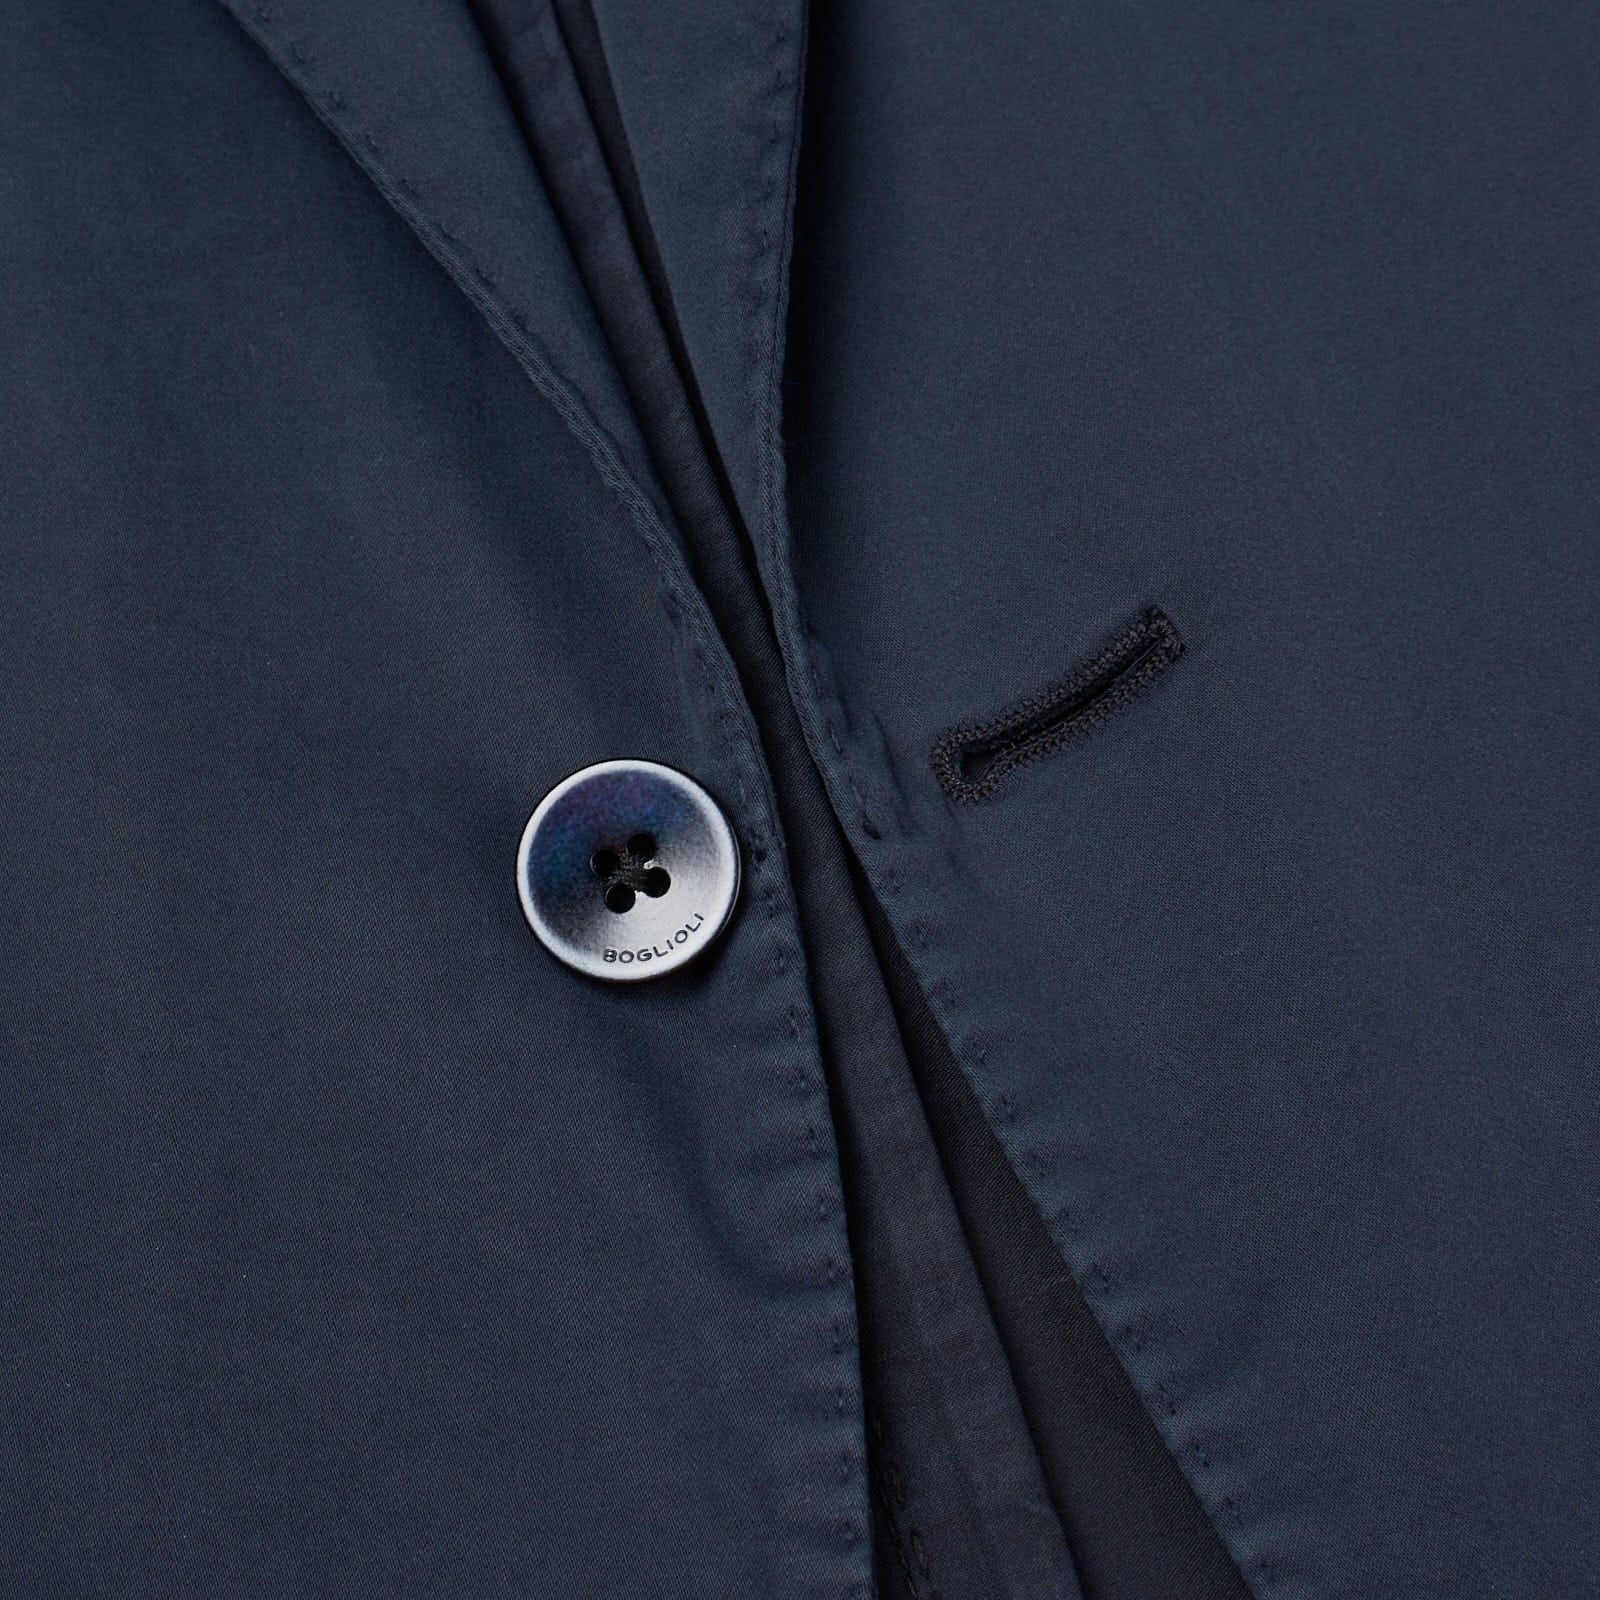 BOGLIOLI Milano "K.Jacket" Blue Cotton Unlined Peak Lapel Jacket EU 50 NEW US 40 BOGLIOLI